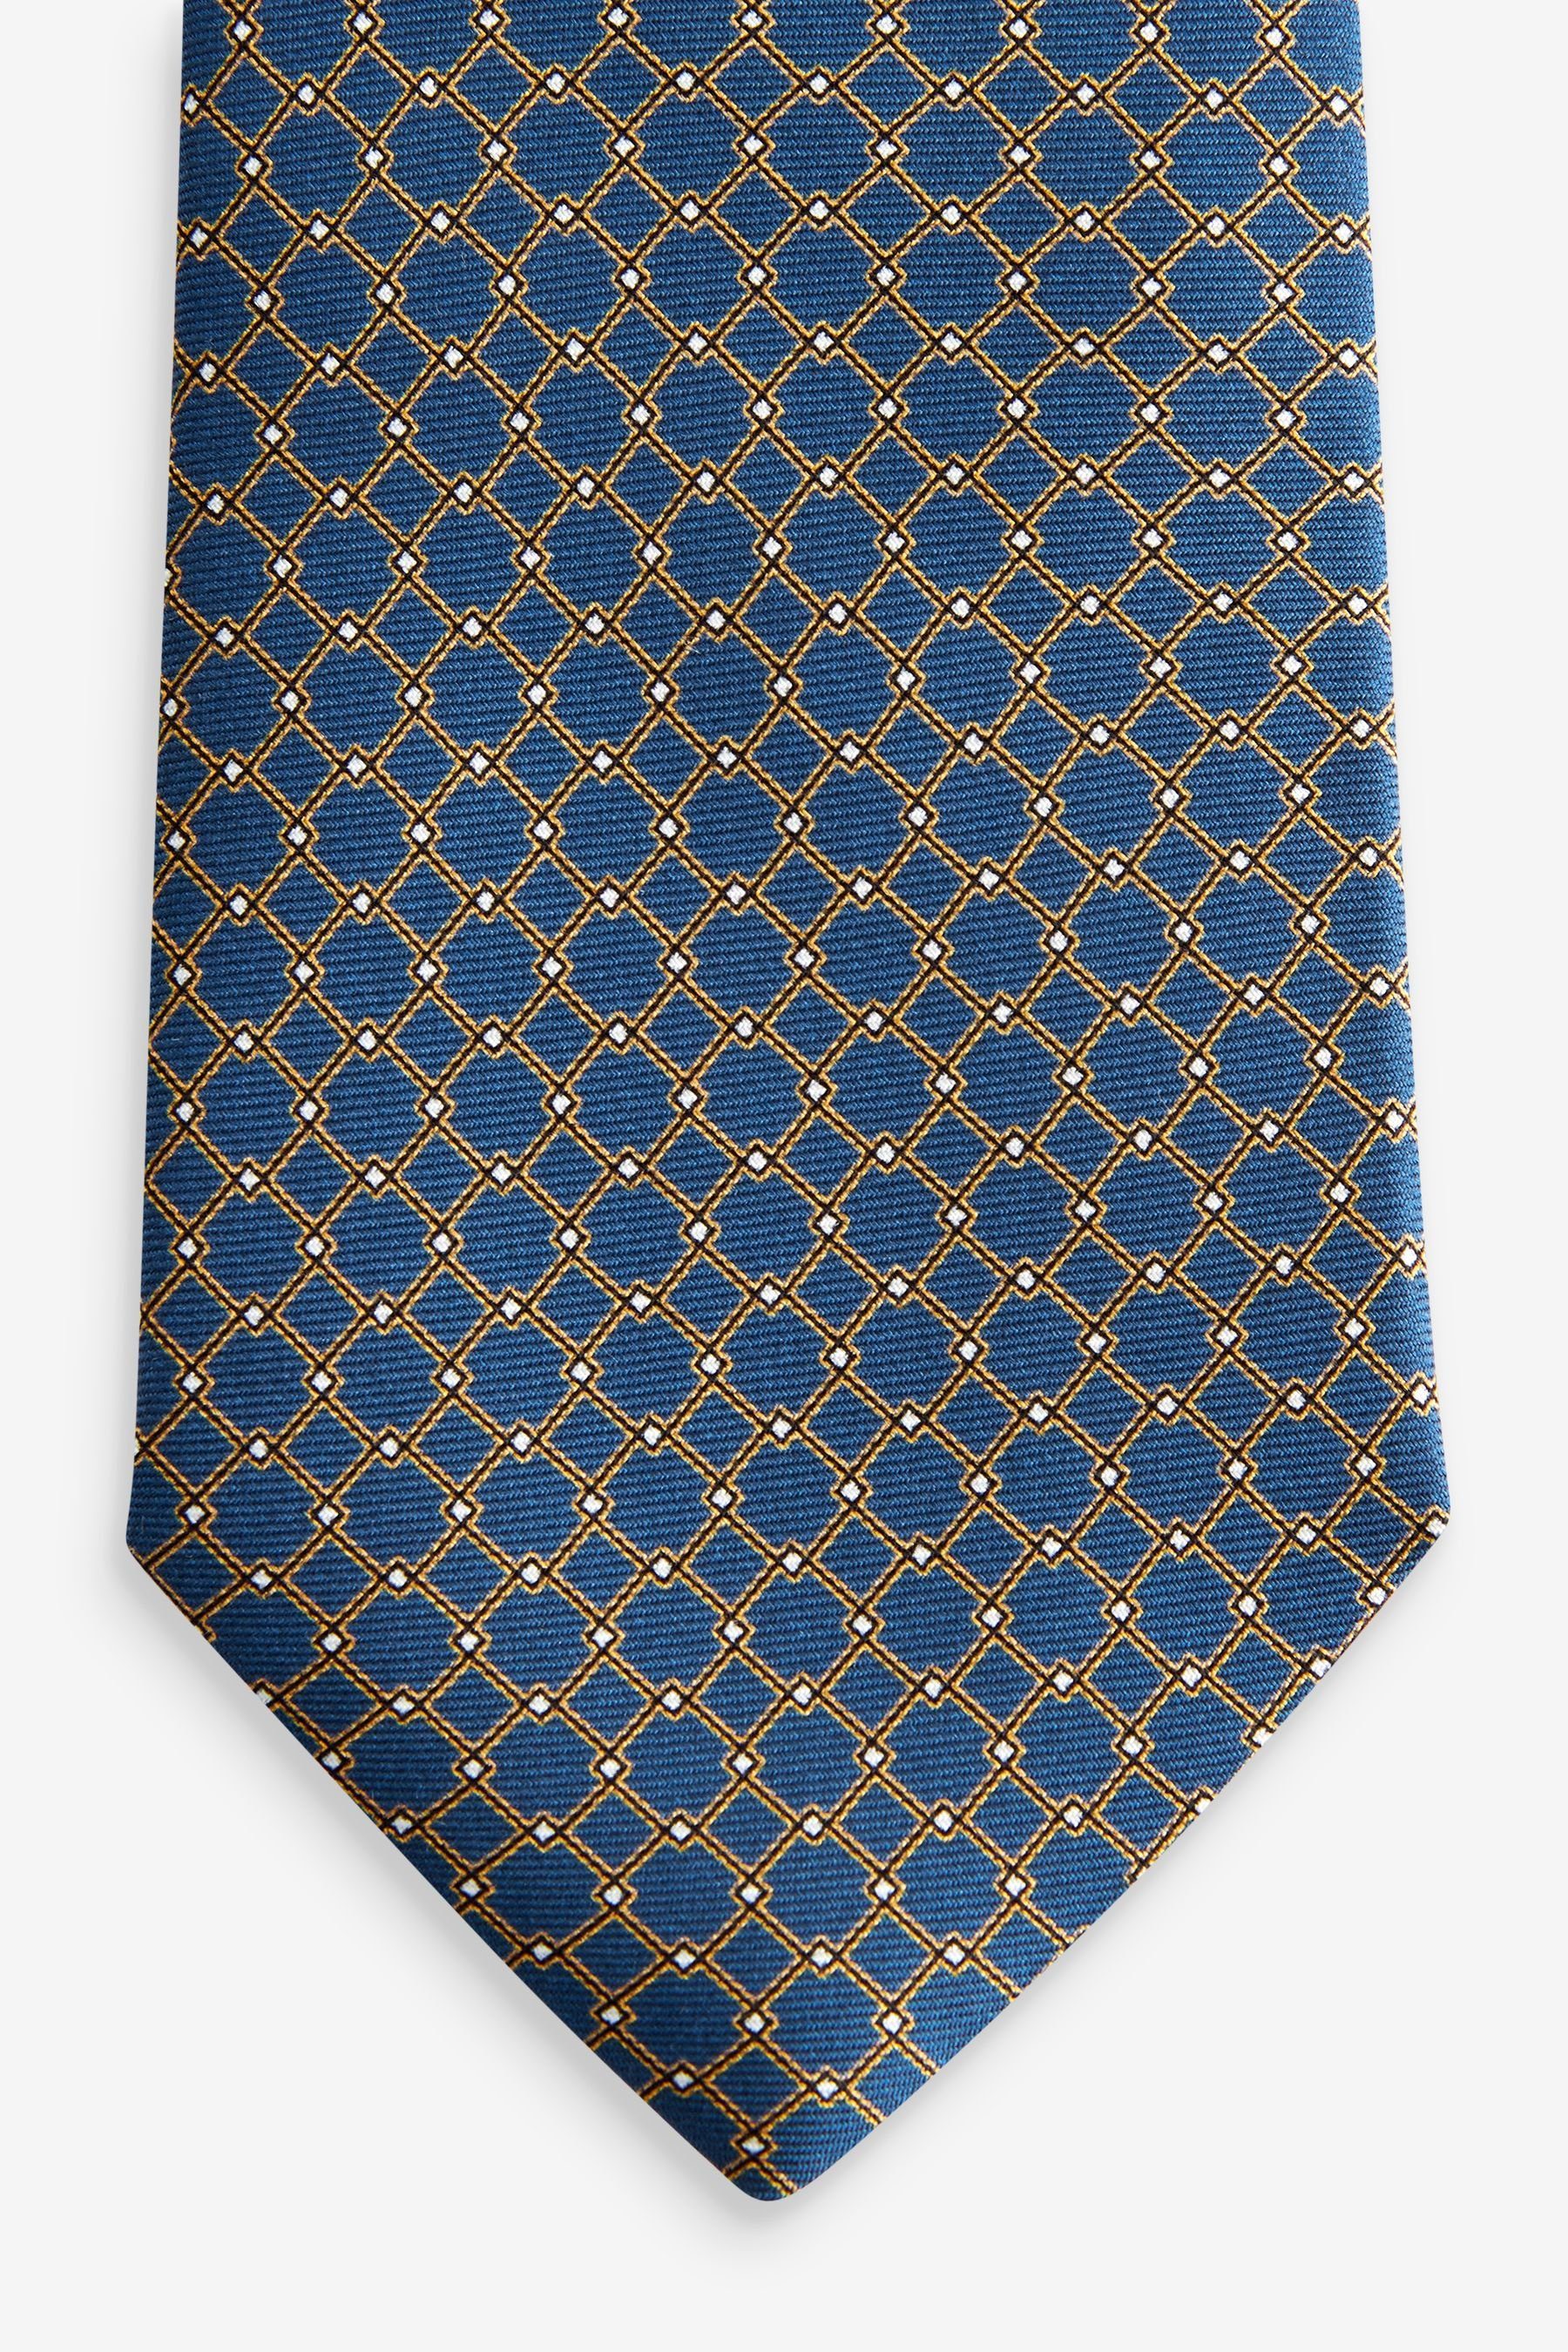 Next Krawatte Blue Signature-Krawatte, Italien (1-St) in Geometric hergestellt Navy